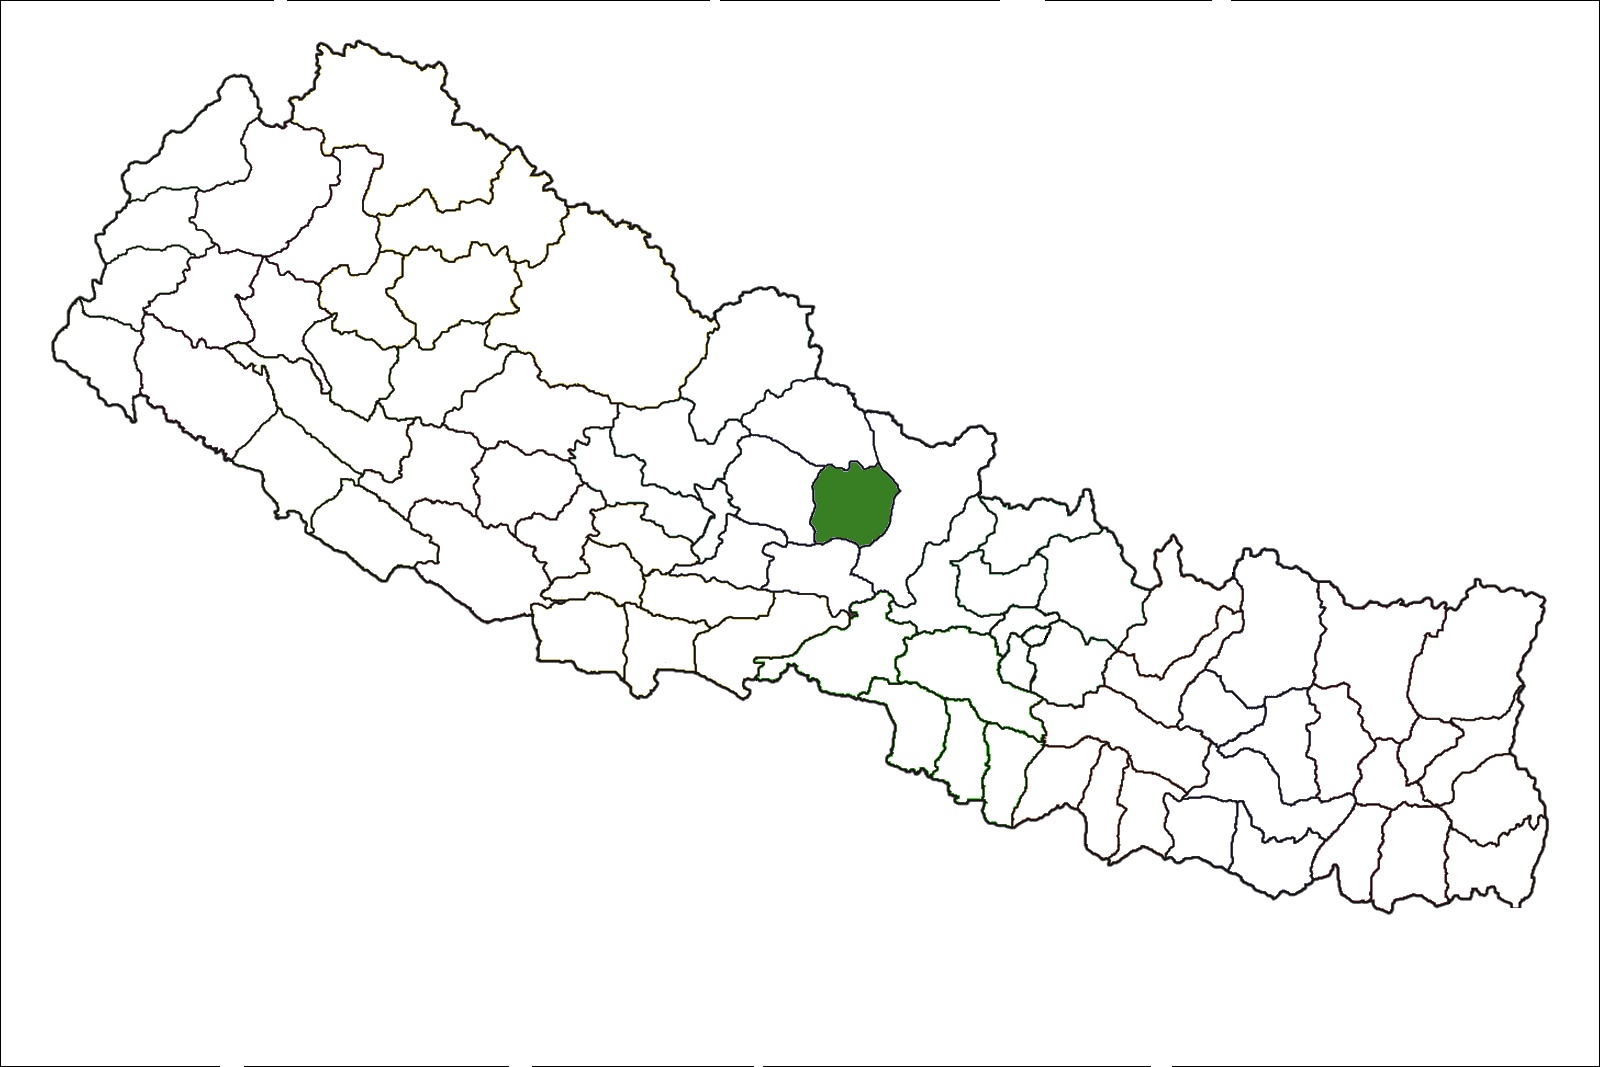 Subdiv_of_Nepal_Lamjung.jpg